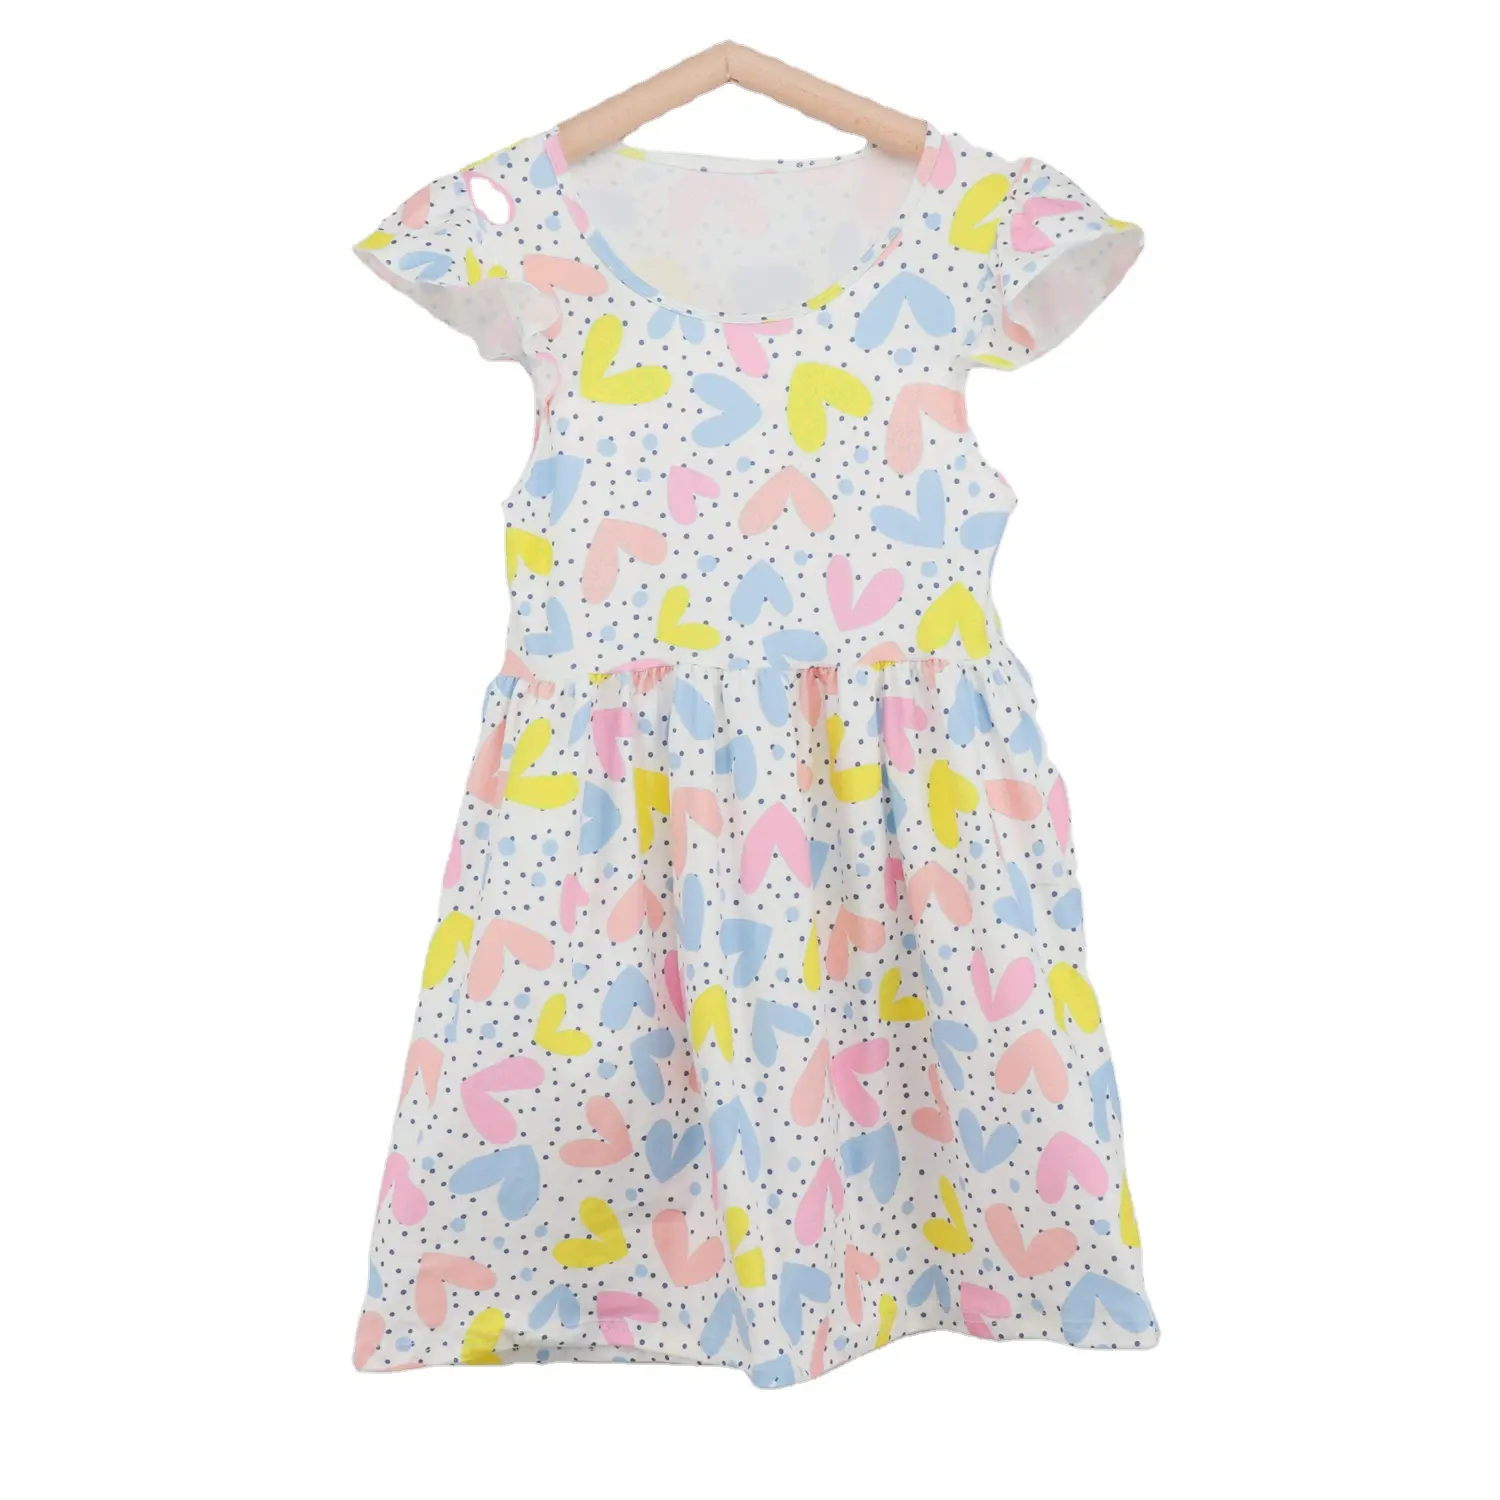 Wholesale Women Sleeveless Dress Super Soft High Quality Custom Fashion Summer Design Love Hearts Multi Color Dots Girl Dresses